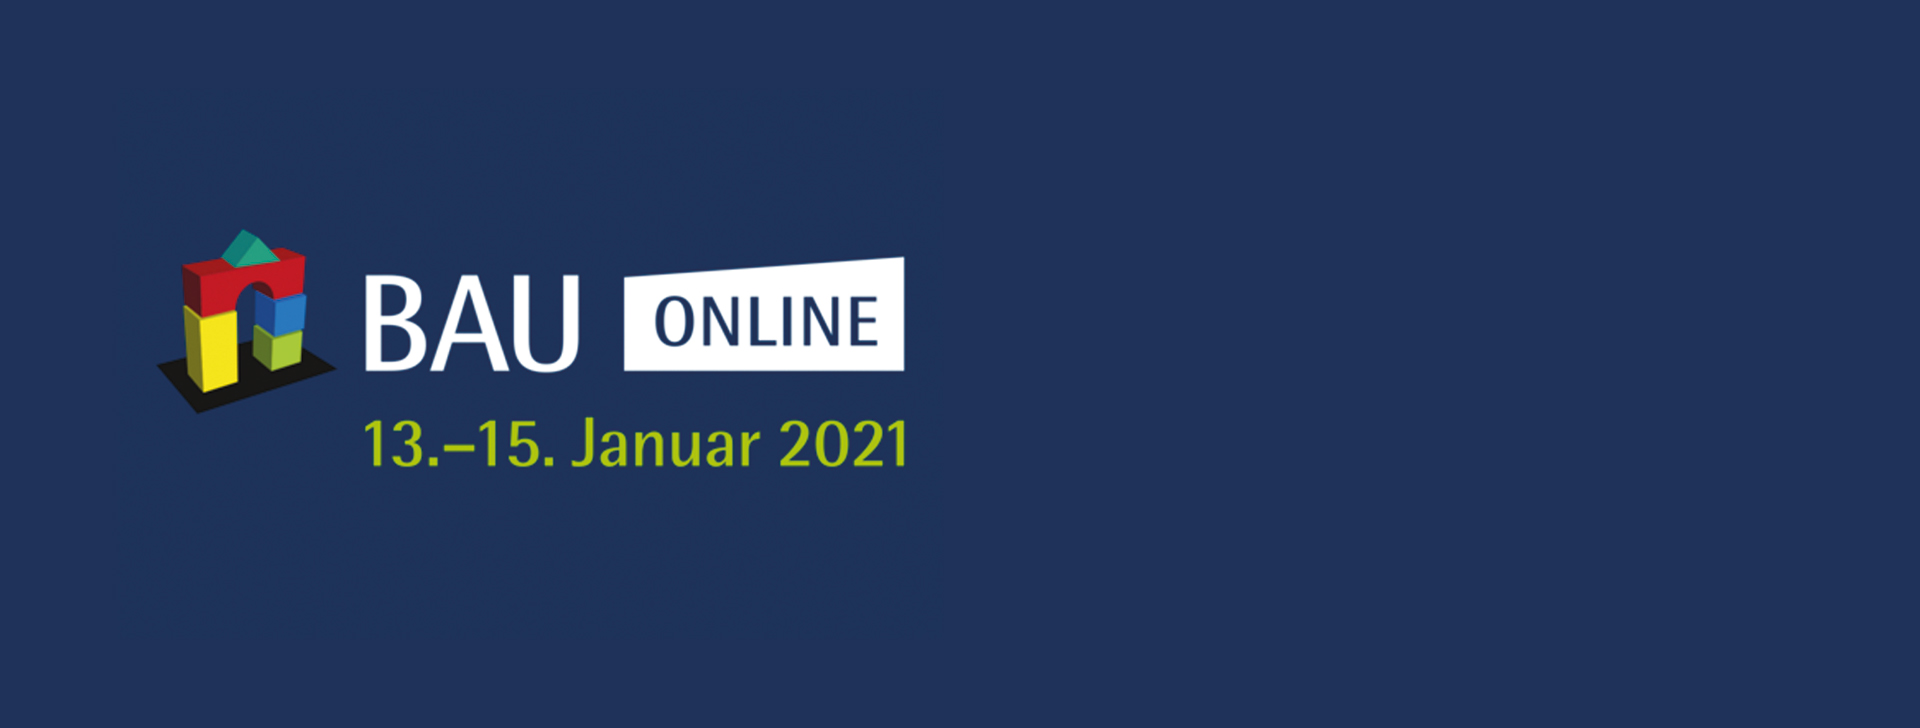 BAU online 2021